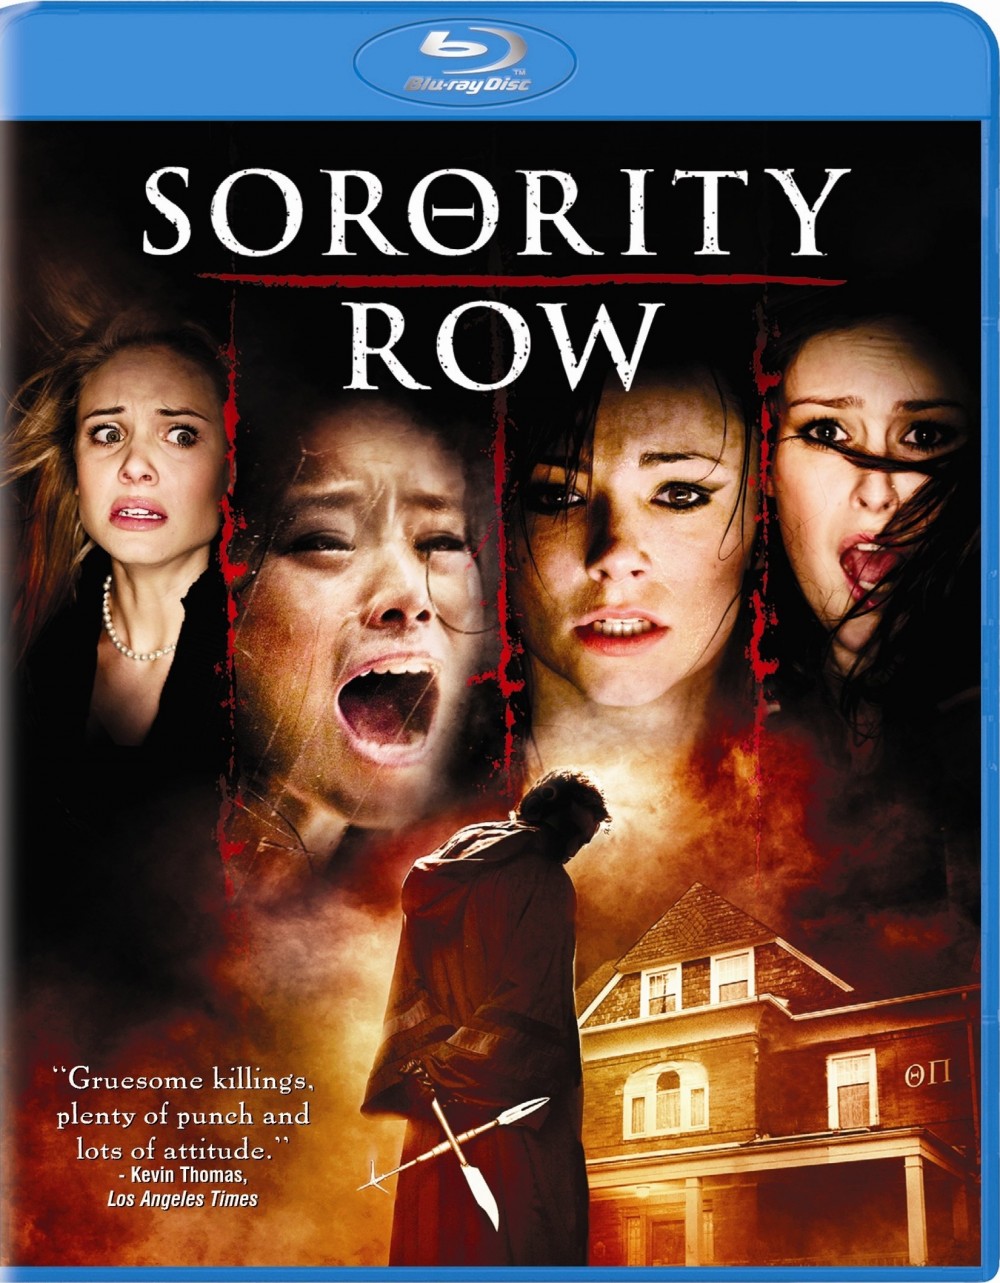 Sorority.Row.2009_01_front.jpg